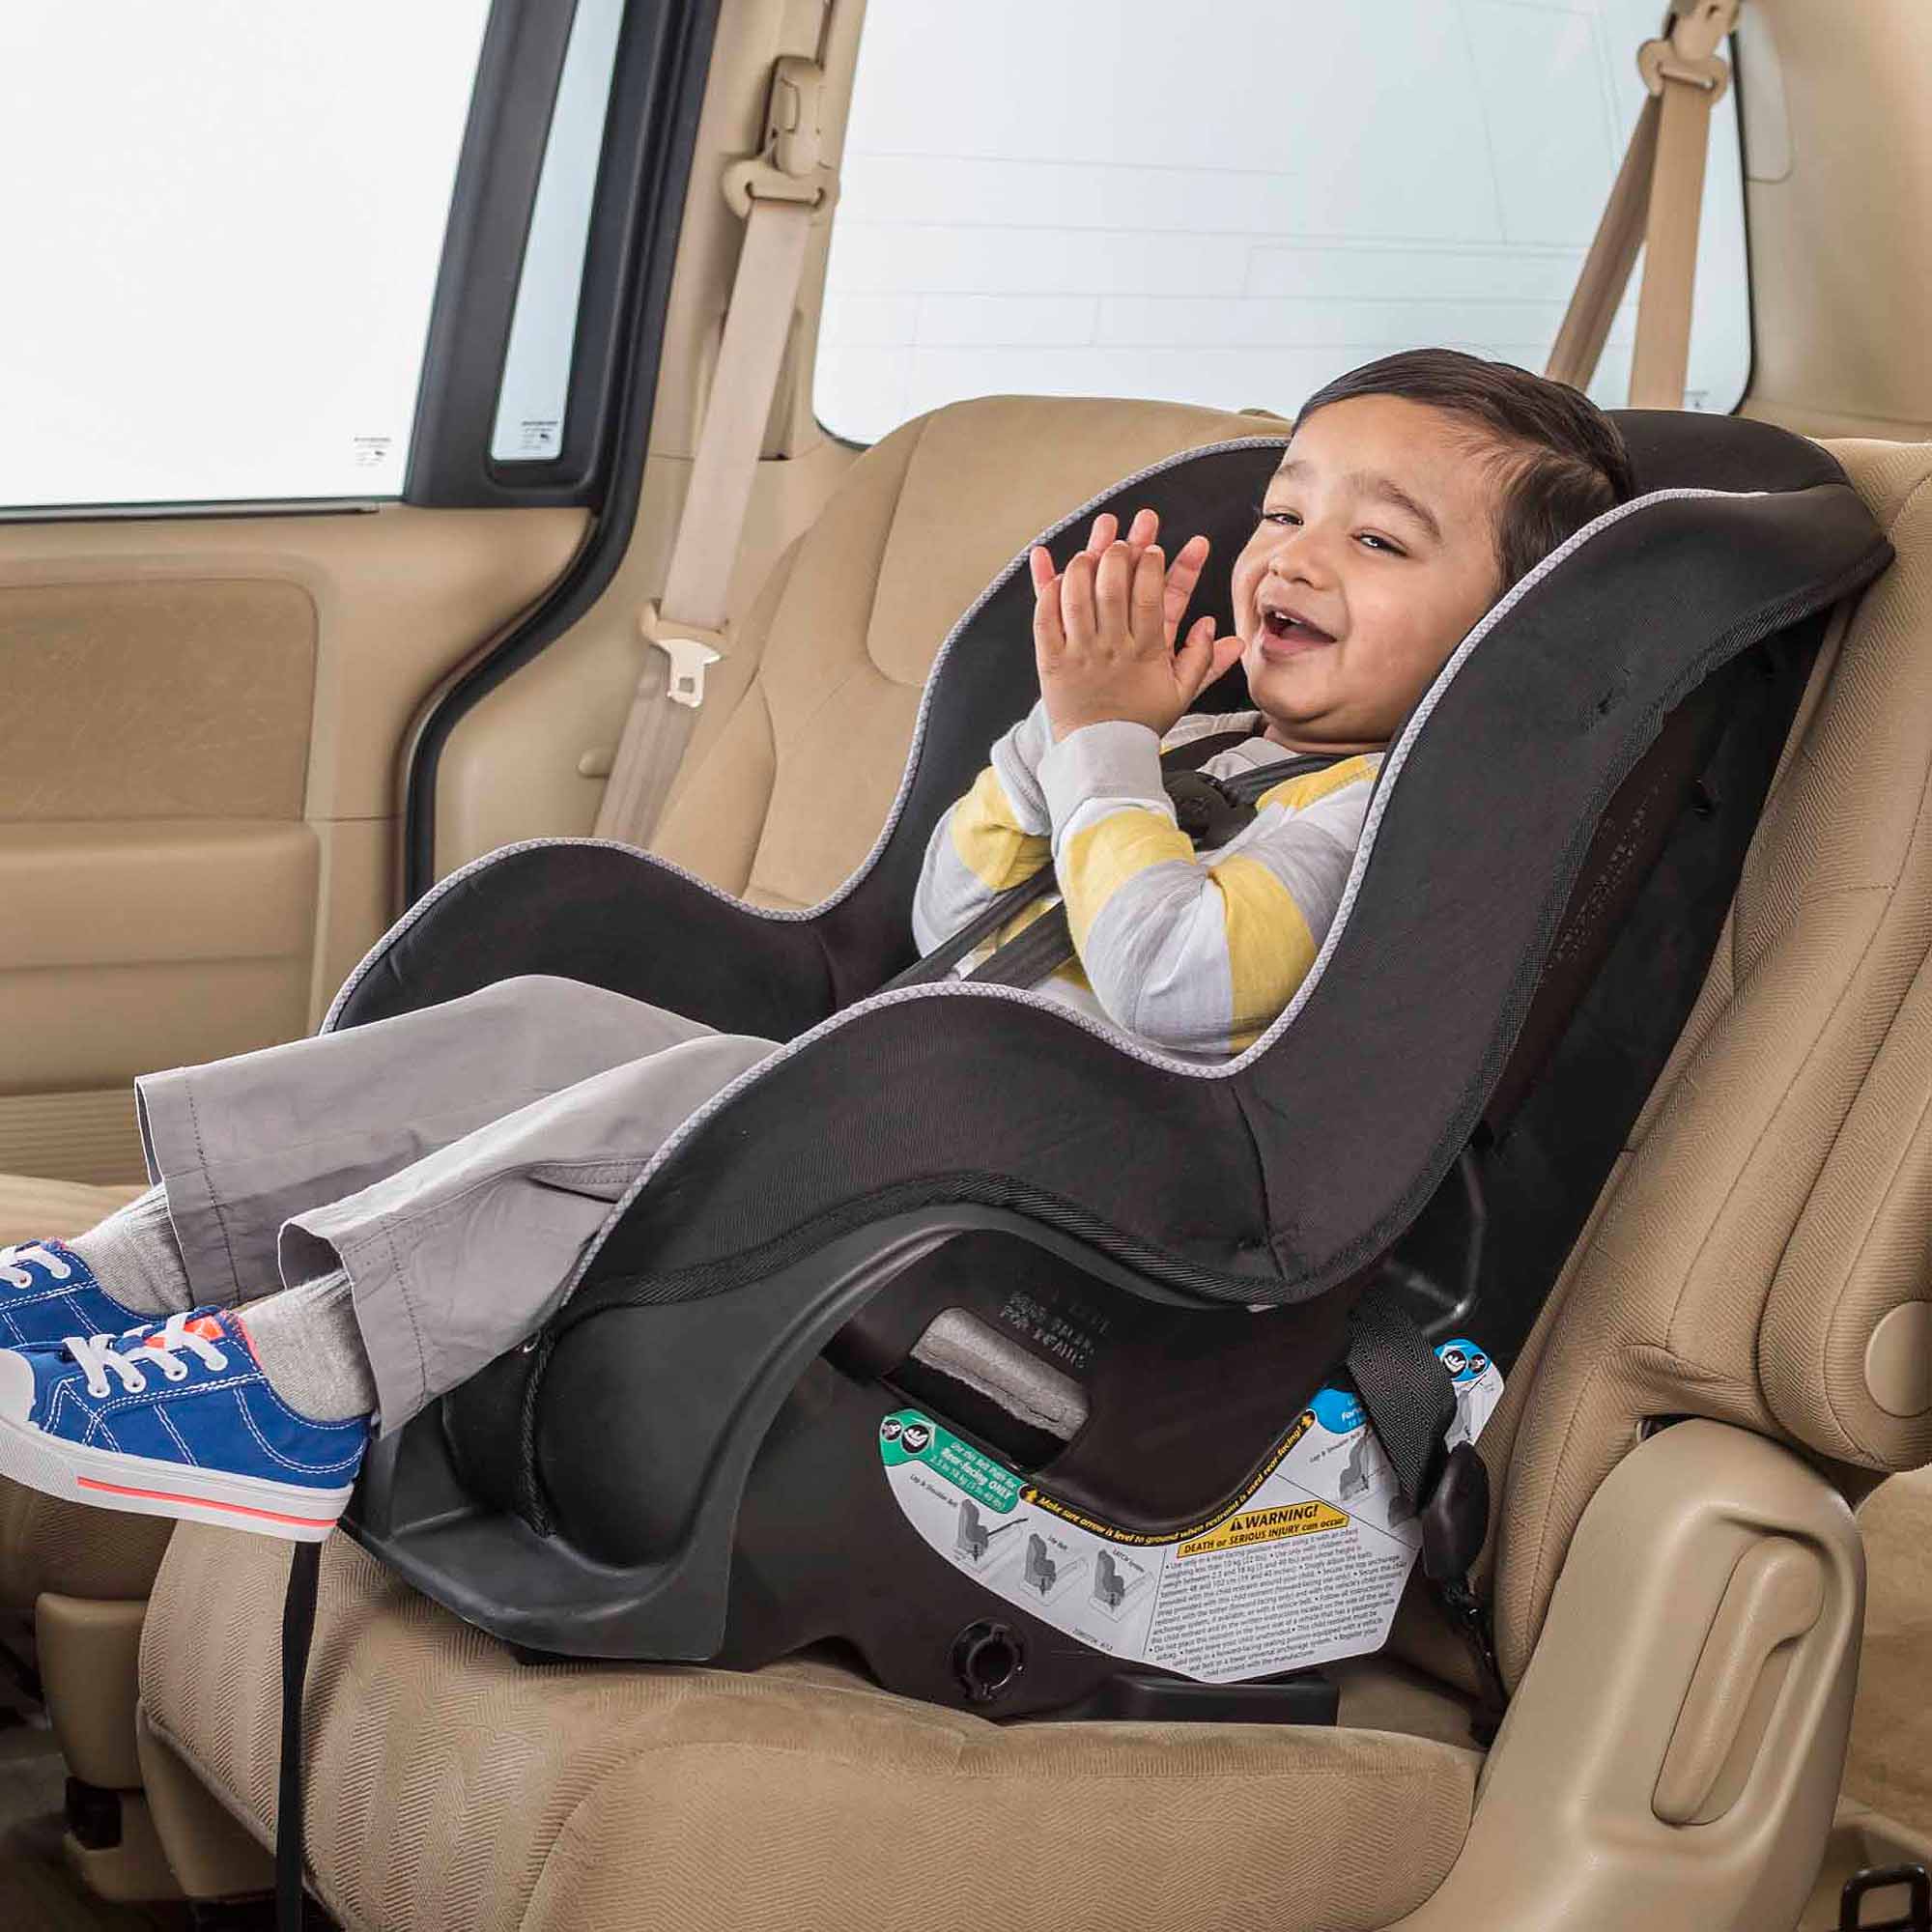 Infant Car Seats Becoming Mandatory In, When Were Car Seats Mandatory